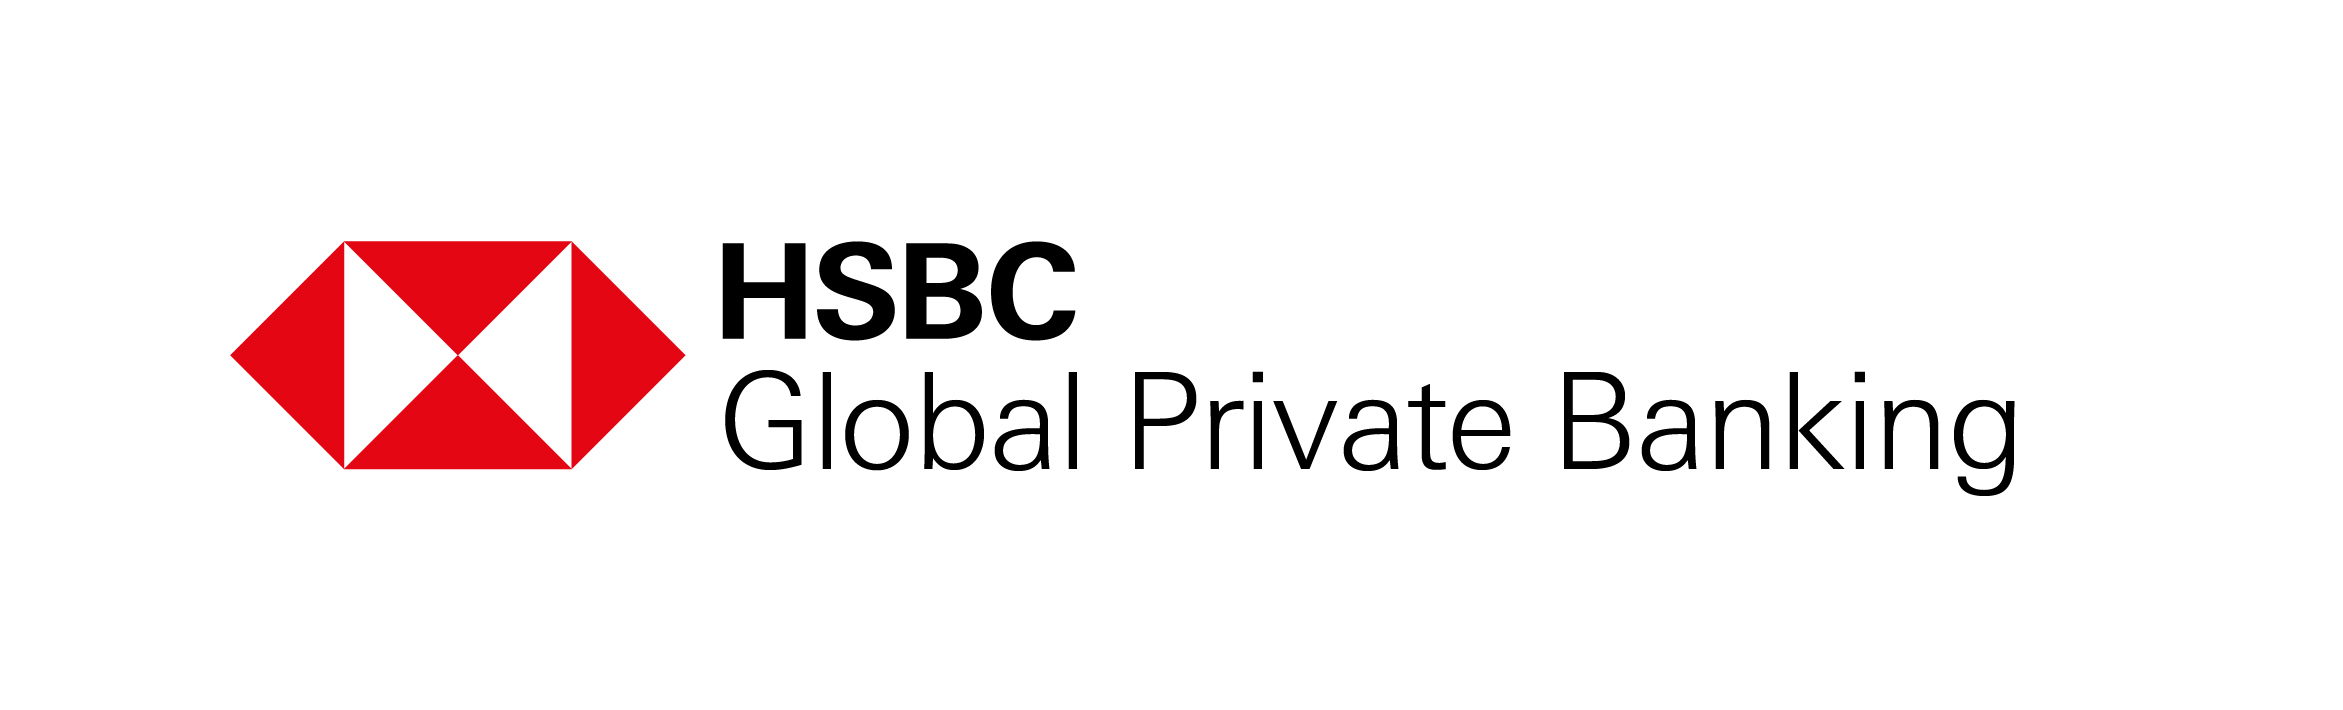 HSBC China Global Private Banking